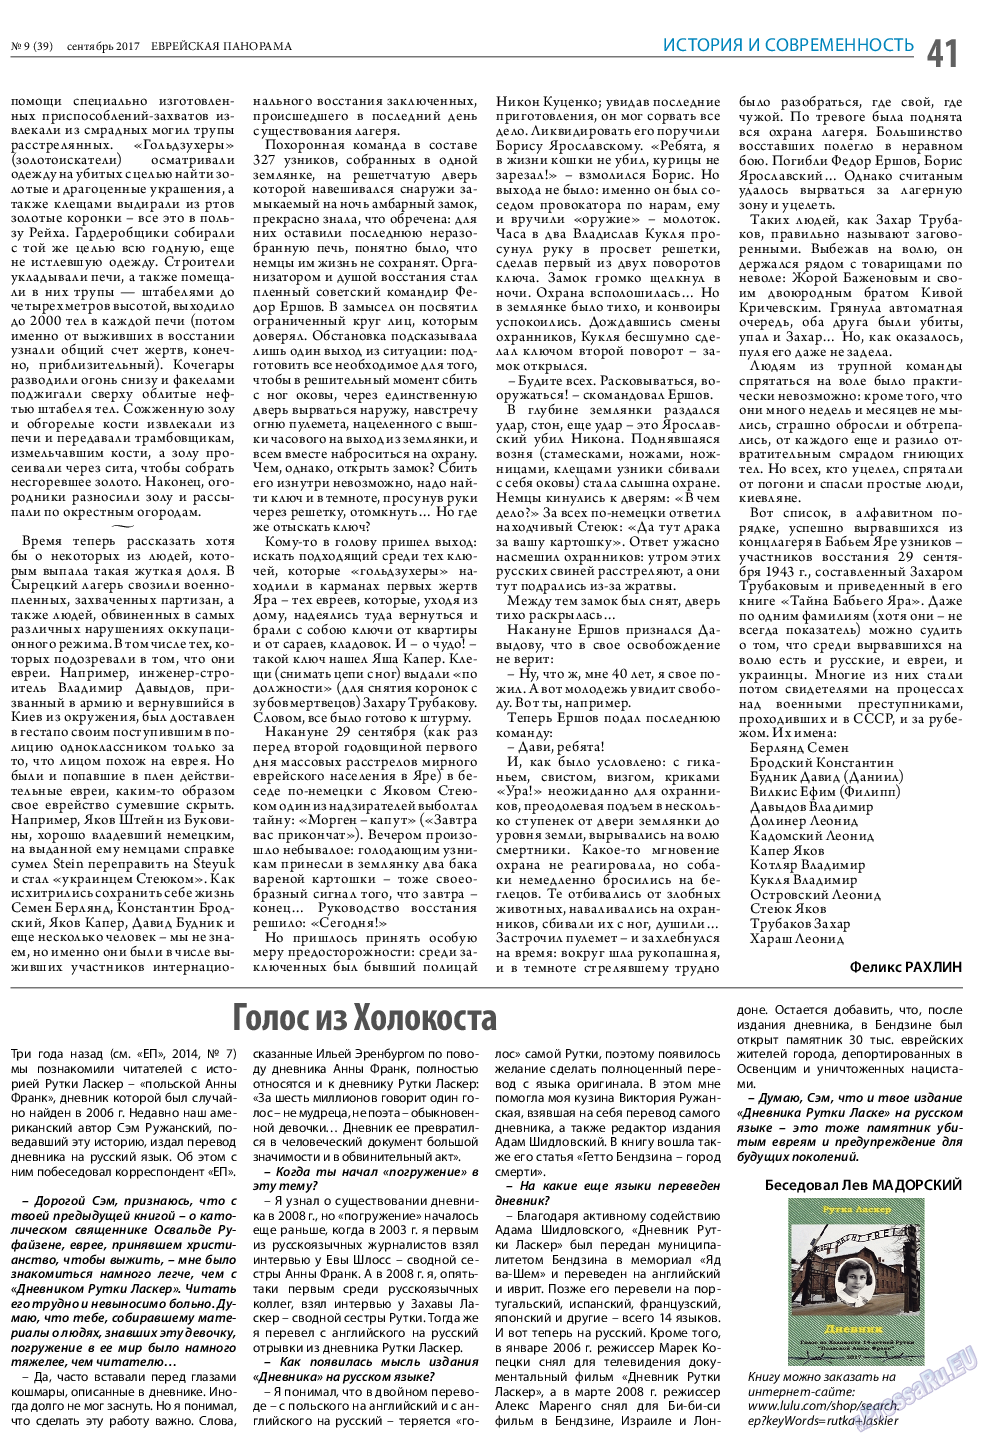 Еврейская панорама, газета. 2017 №9 стр.41